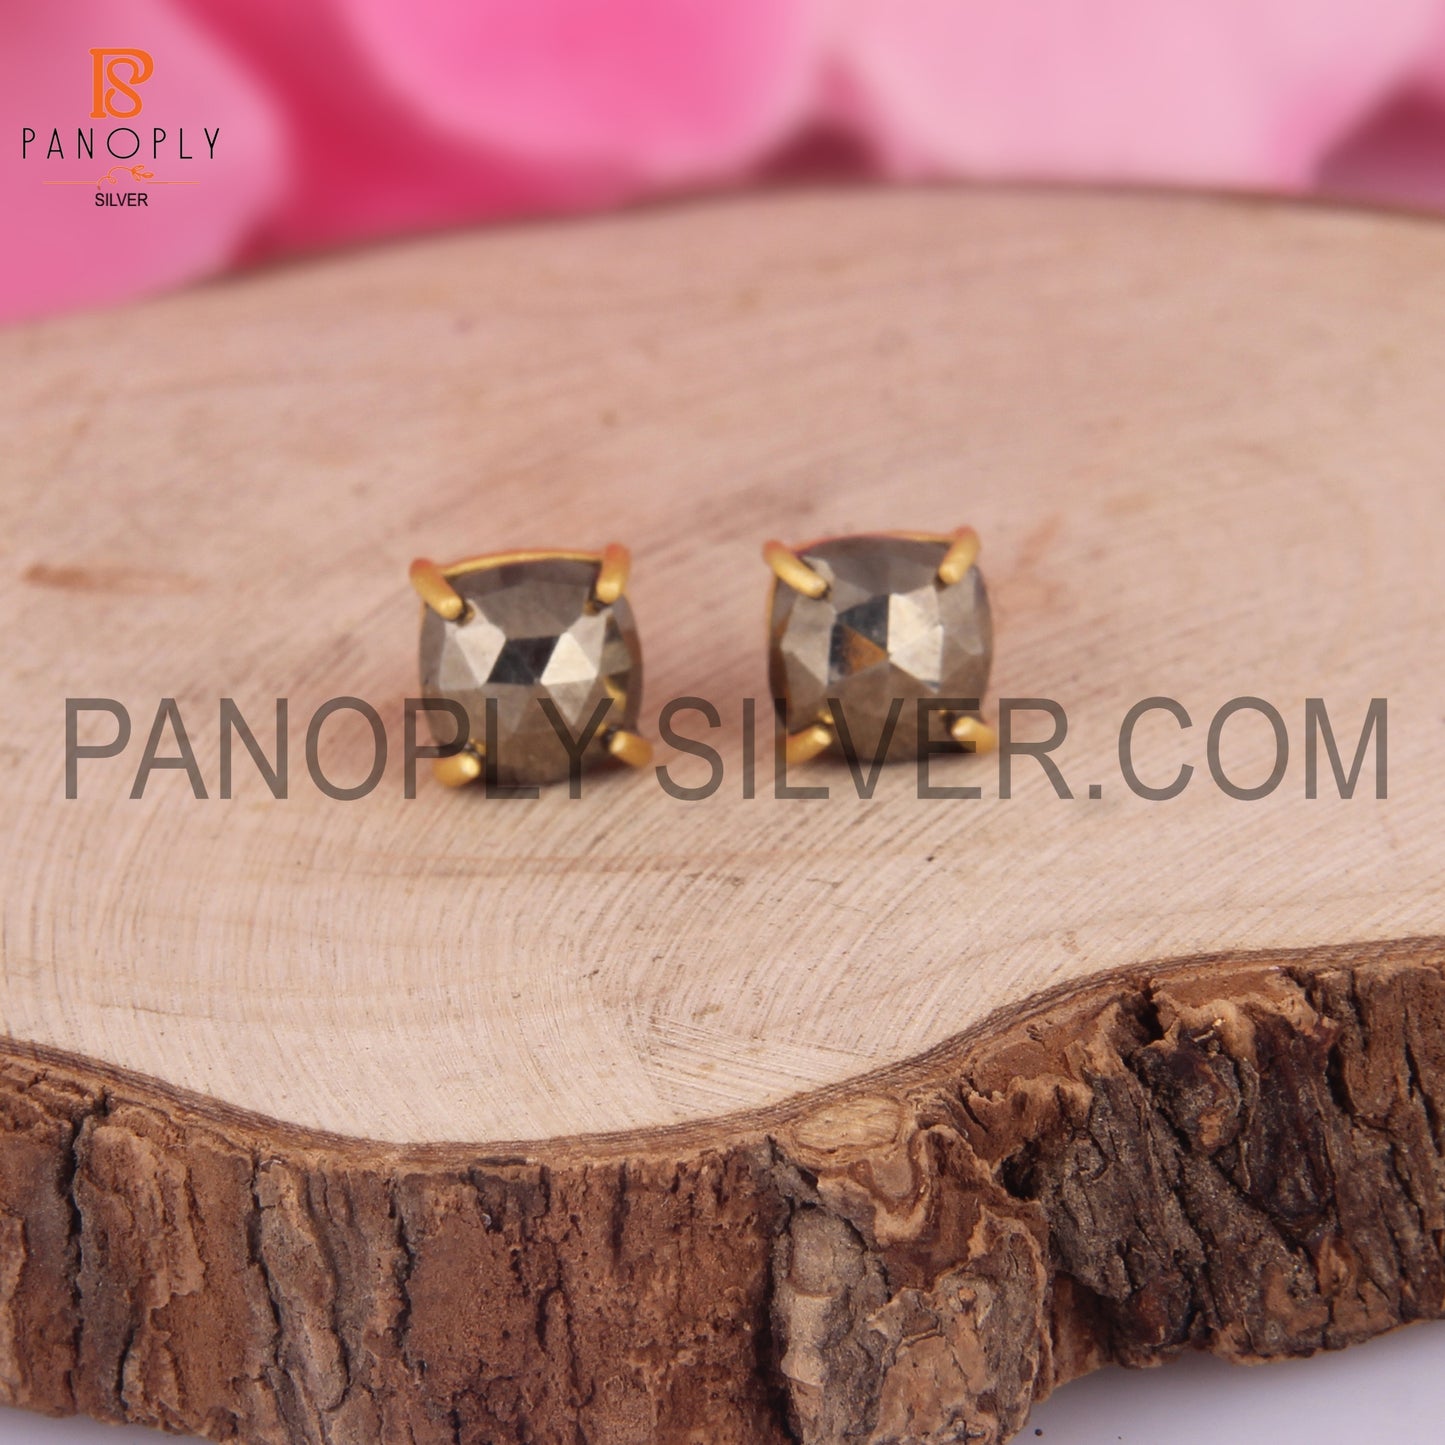 Gold Plated Pyrite Gemstone Stud Earrings Jewelry